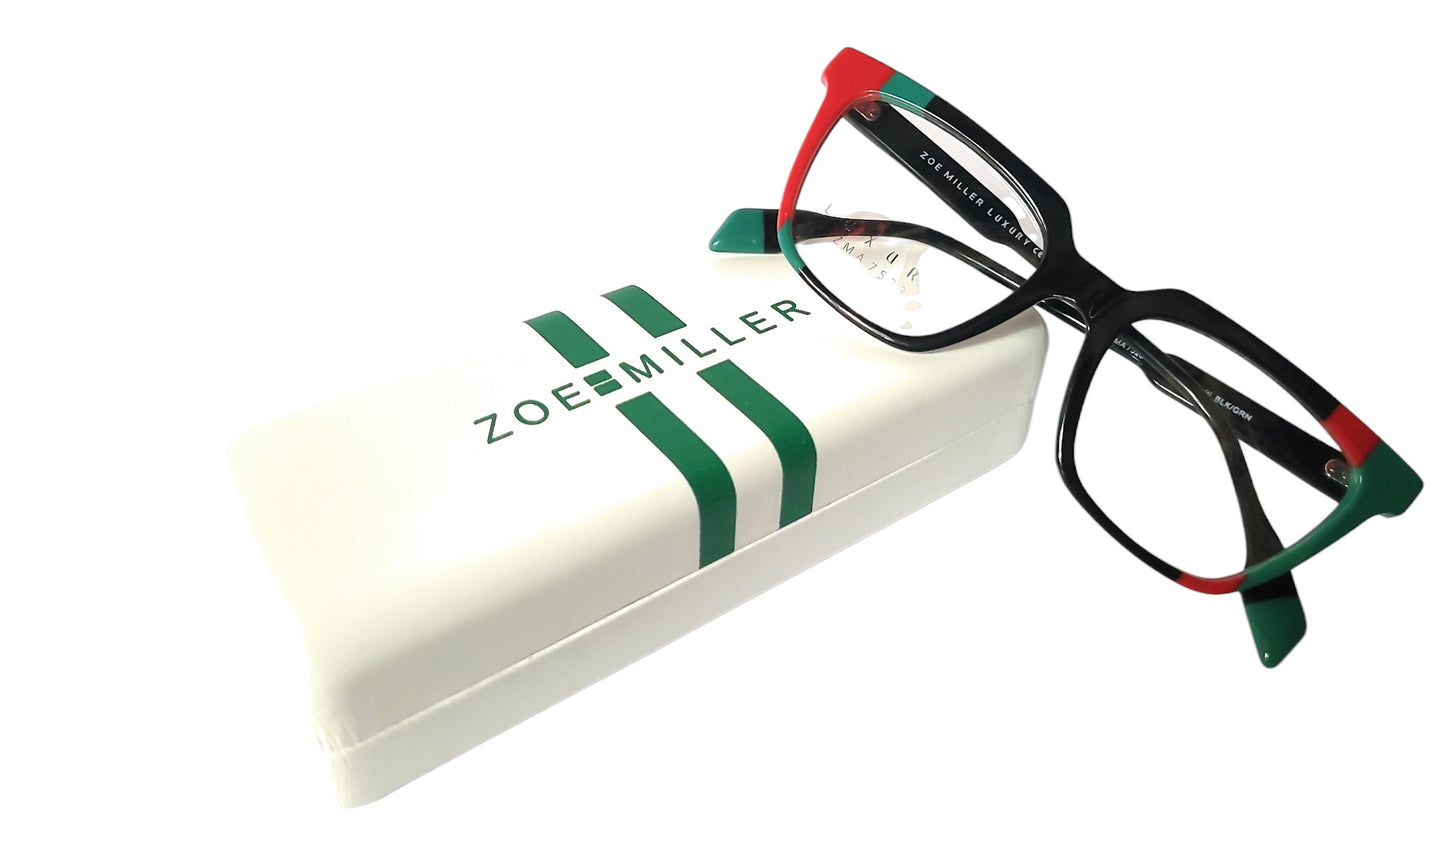 Zoe Miller Eyewear Spectacle Luxury ZMA7523 Multi BLK/GRN